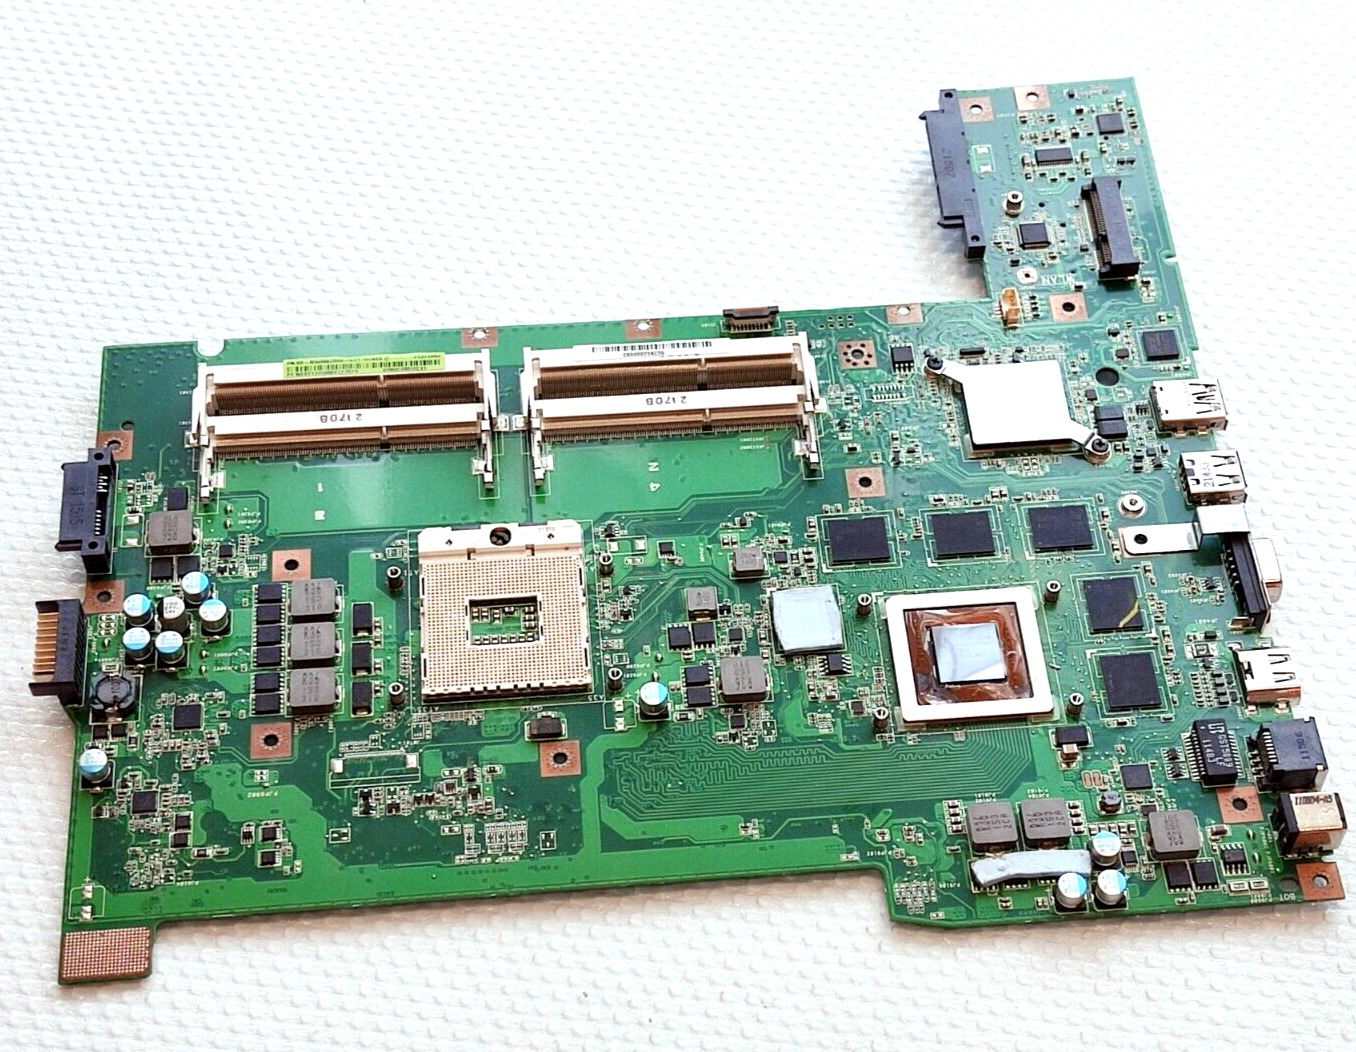 Original Asus ROG G74S G74SX Laptop Motherboard GPU Nvidia GeForce GTX560M Used